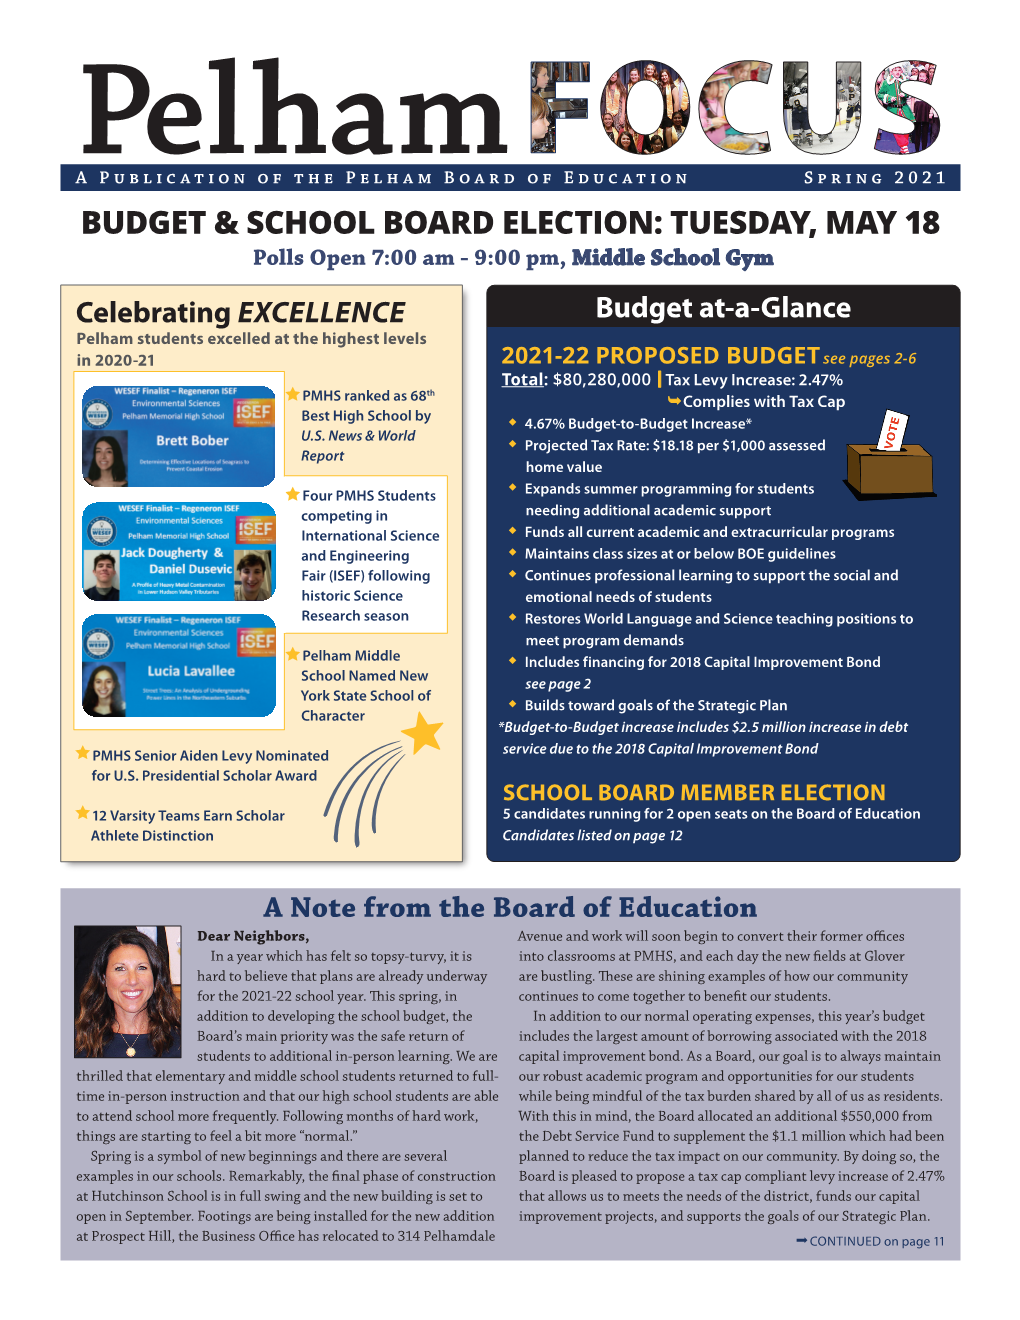 Budget & School Board Election